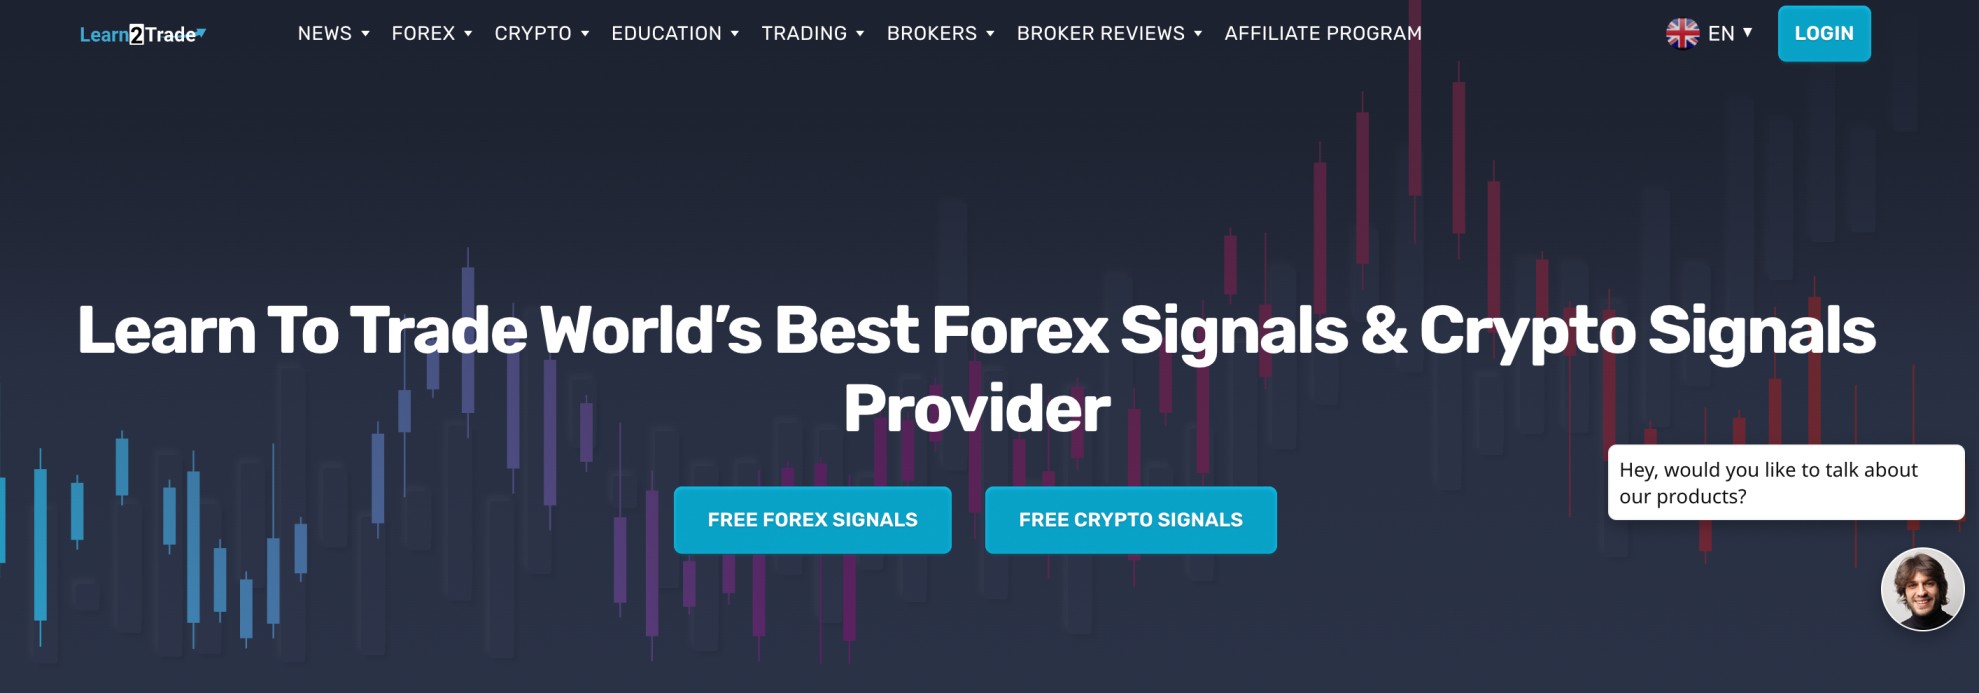 free forex signal providers list